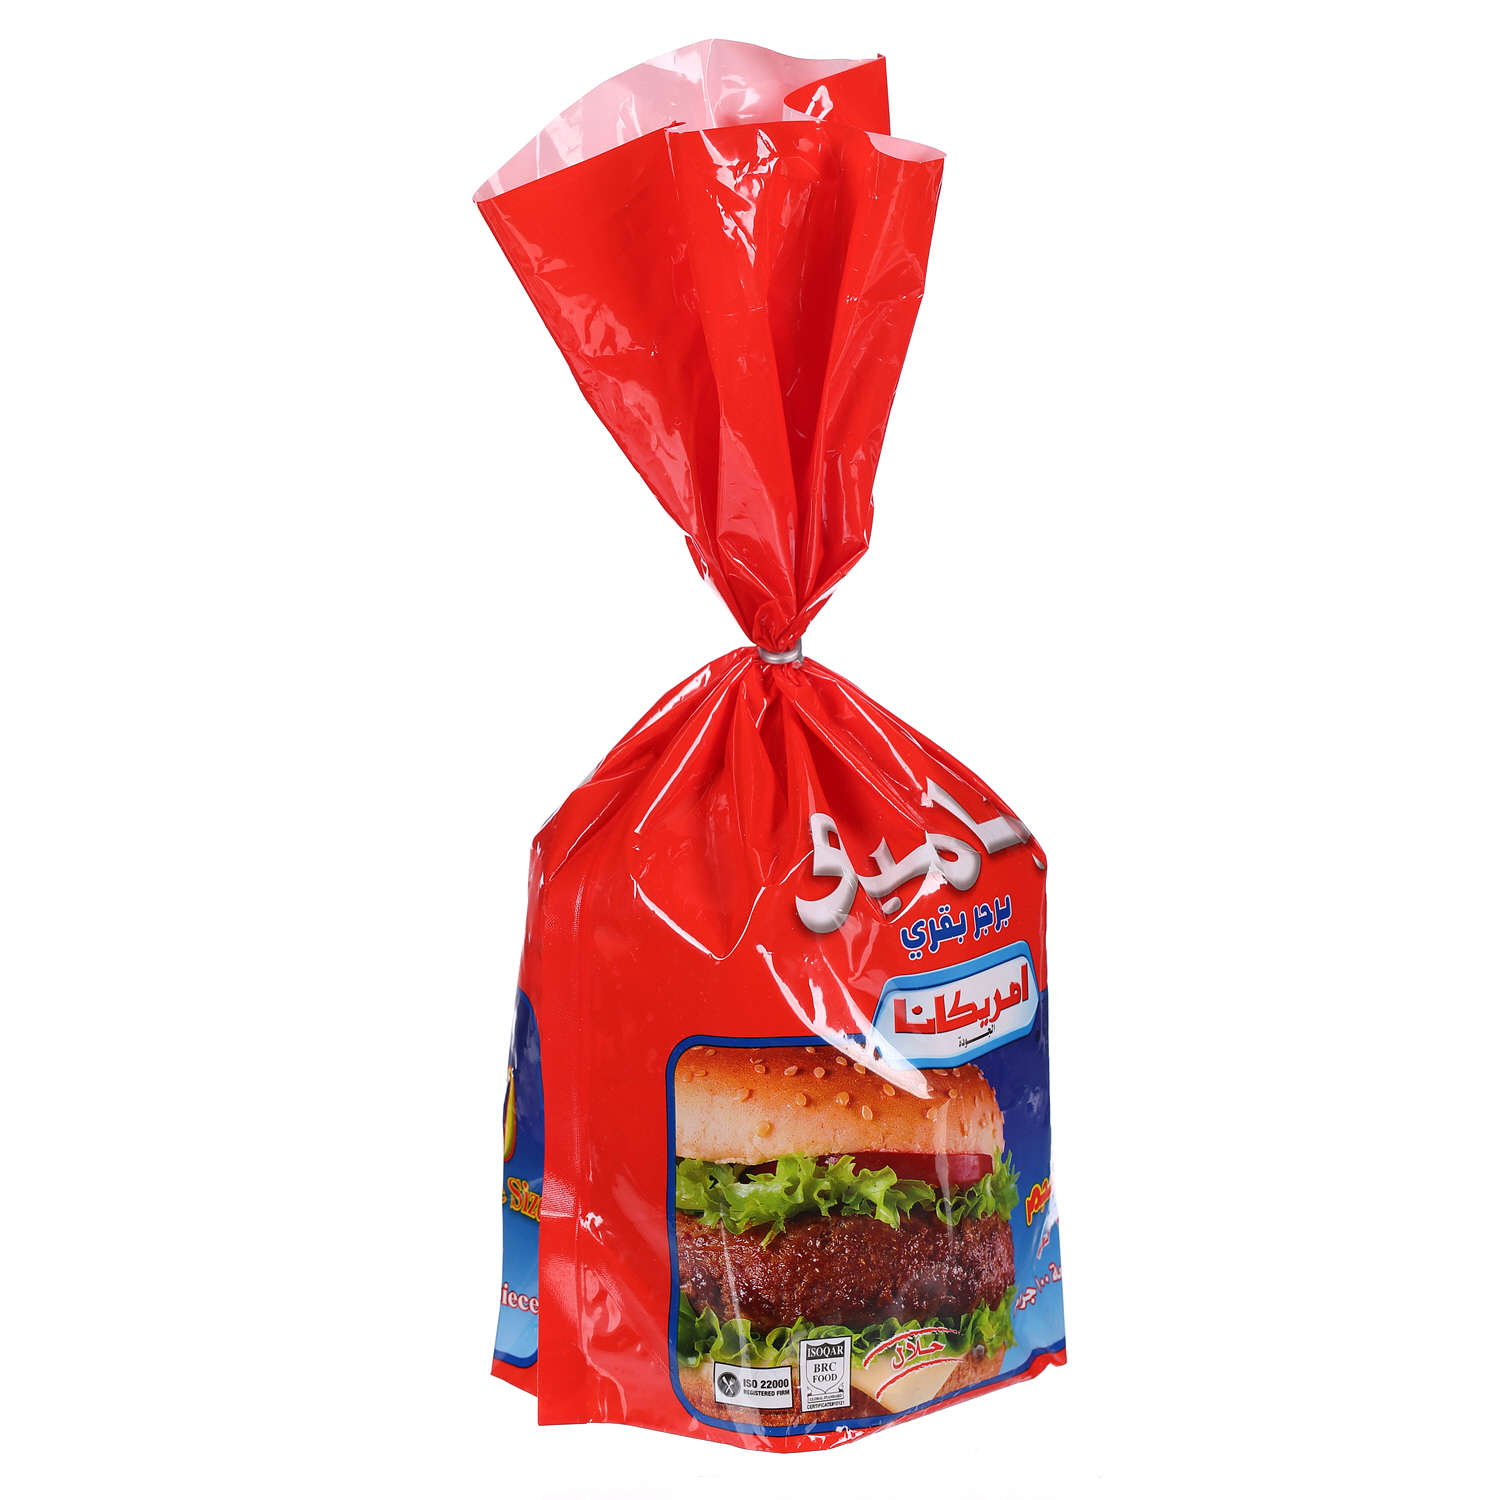 Americana Classic Beef Burger 1 Kg